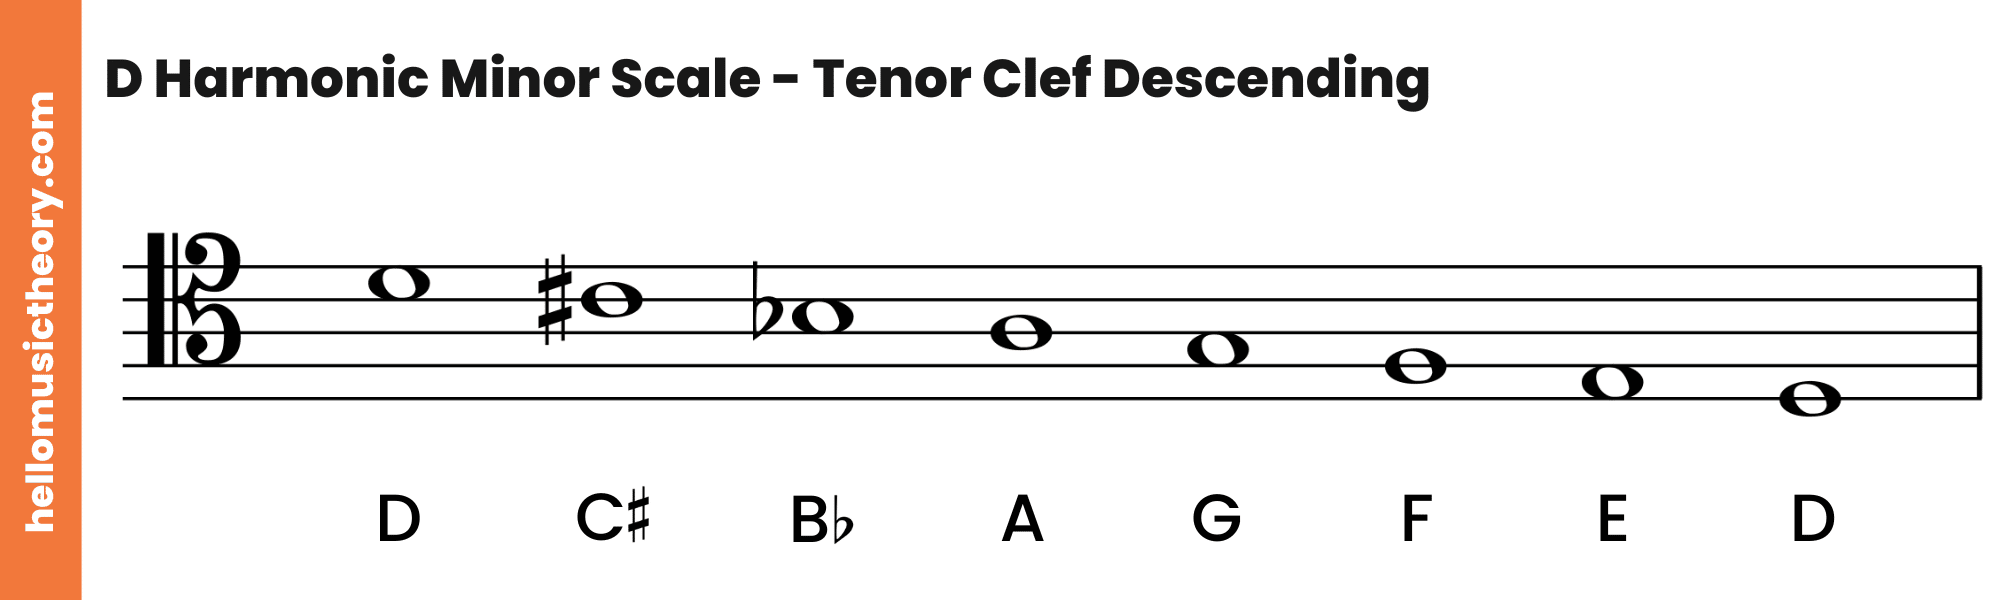 D Harmonic Minor Scale Tenor Clef Descending